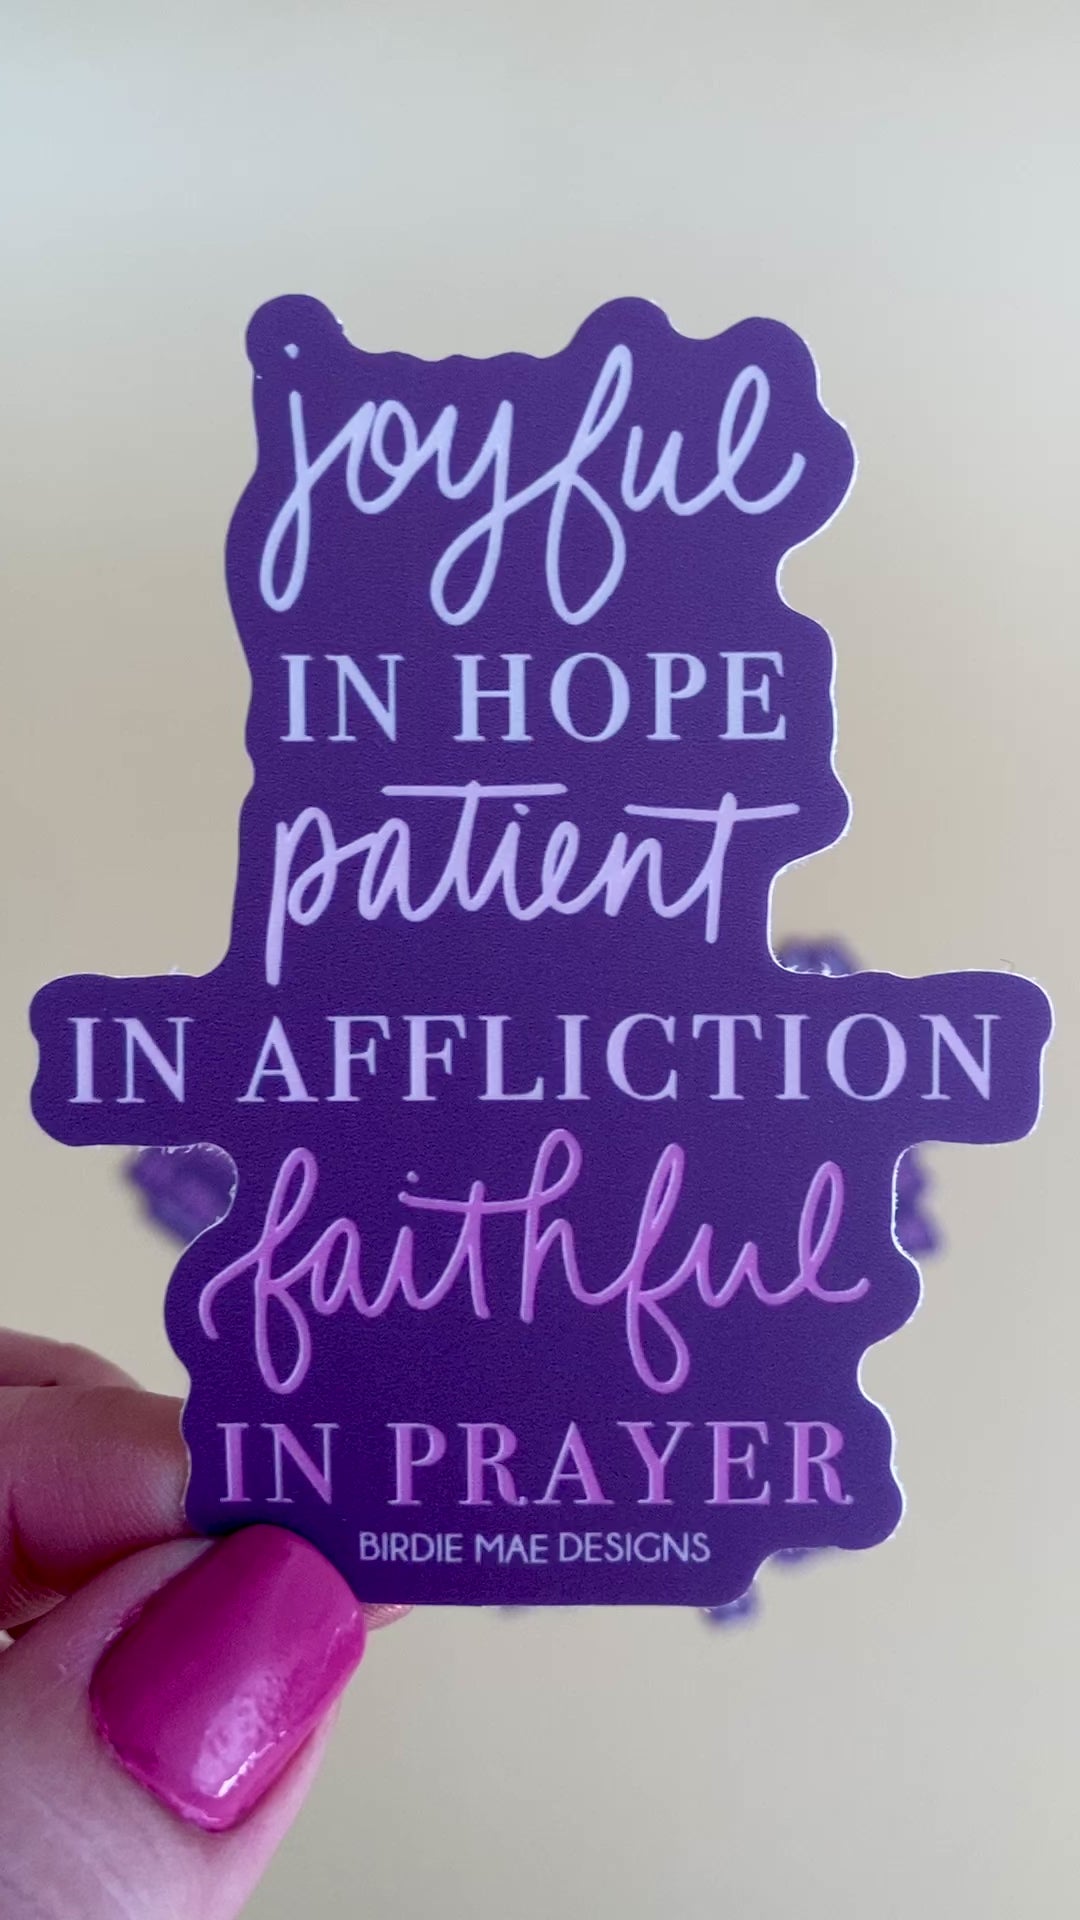 Joyful in Hope Patient in Affliction Faithful in Prayer Sticker christian sticker, faith sticker, bible verse sticker, inspirational sticker